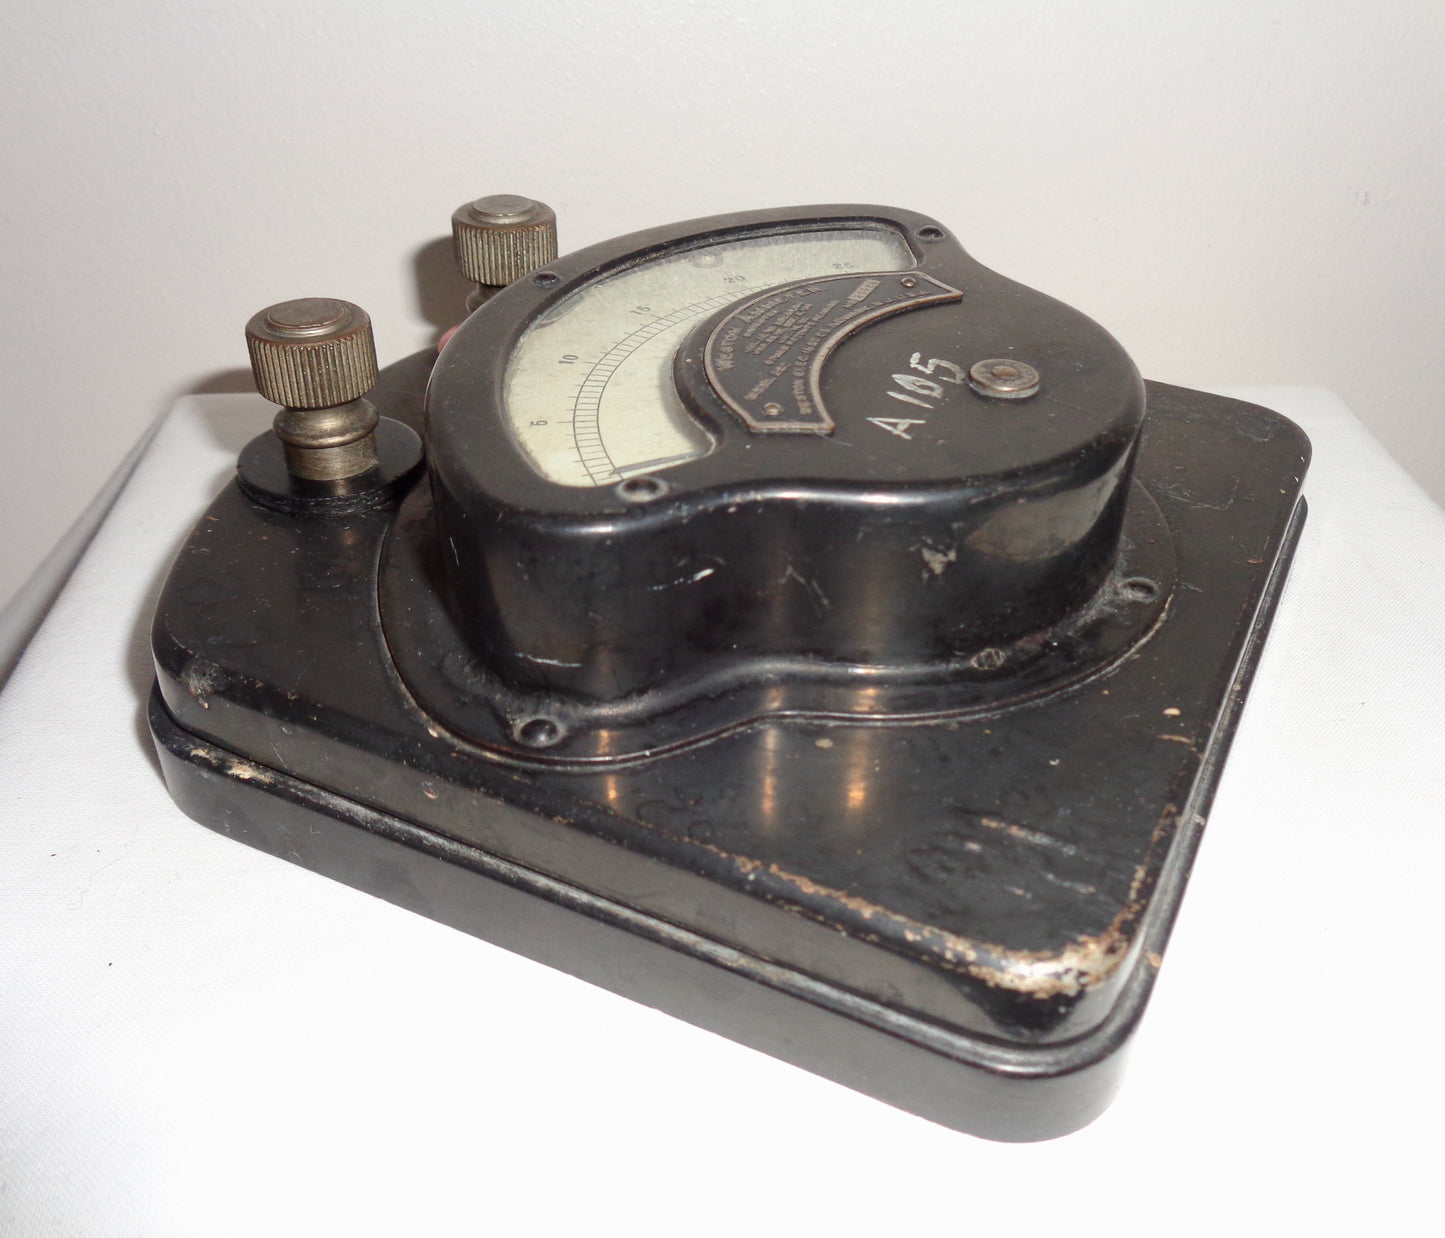 Antique Weston Electrical Instruments Ammeter Model 280 Serial Number 23058